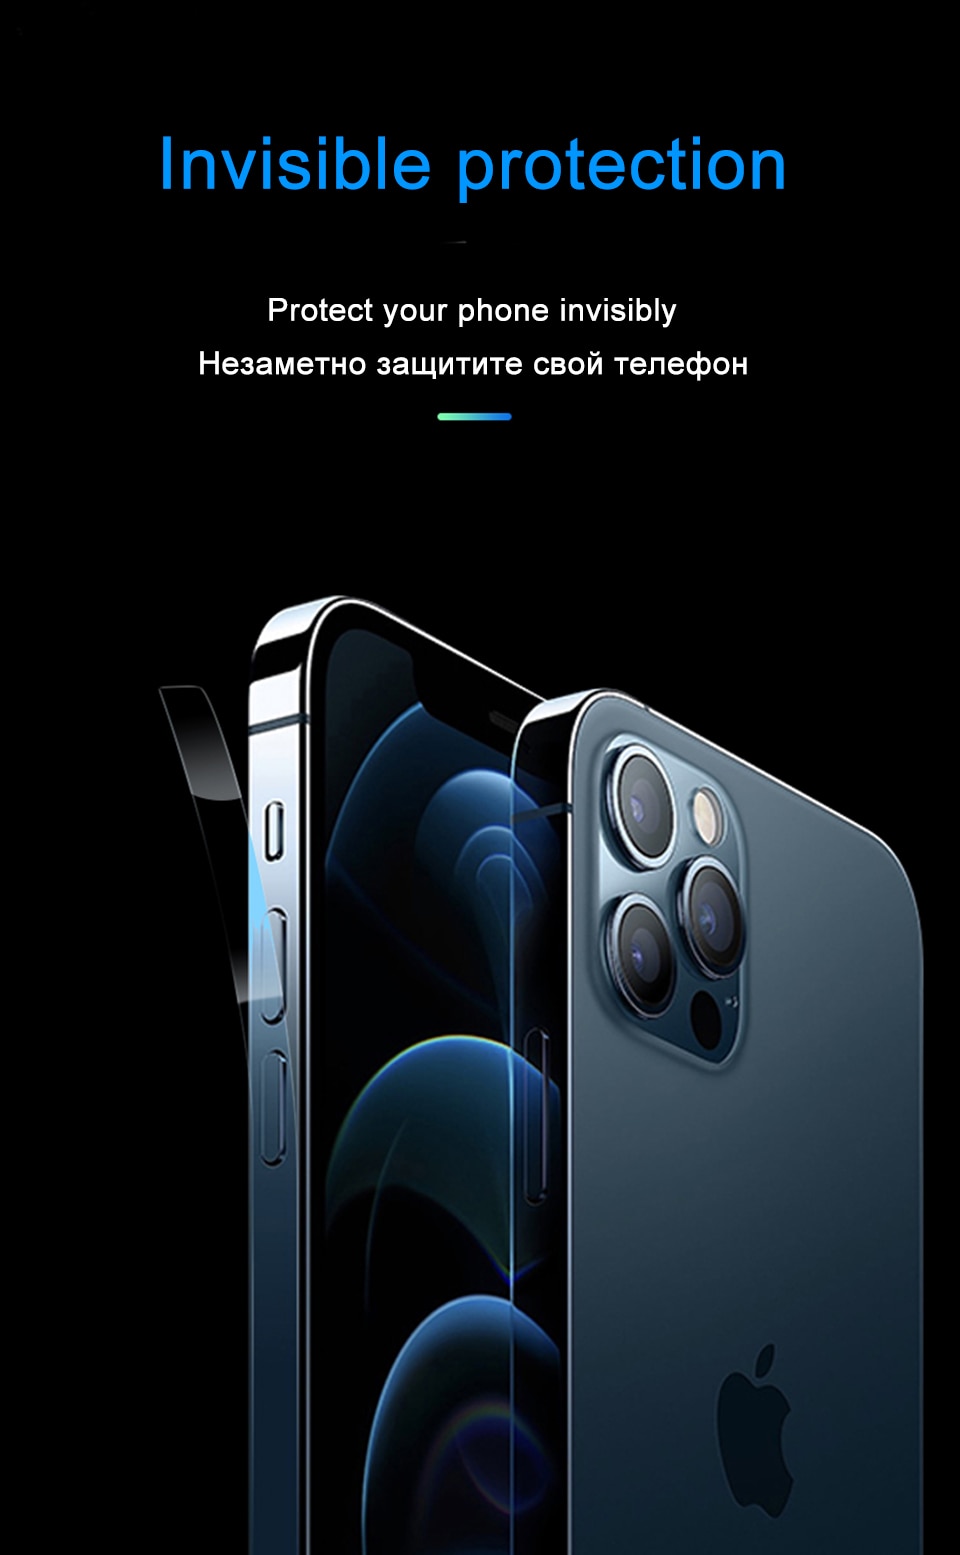 Carbon Fiber Sticker Clear Matte Phone Side Film For iPhone 12 Pro